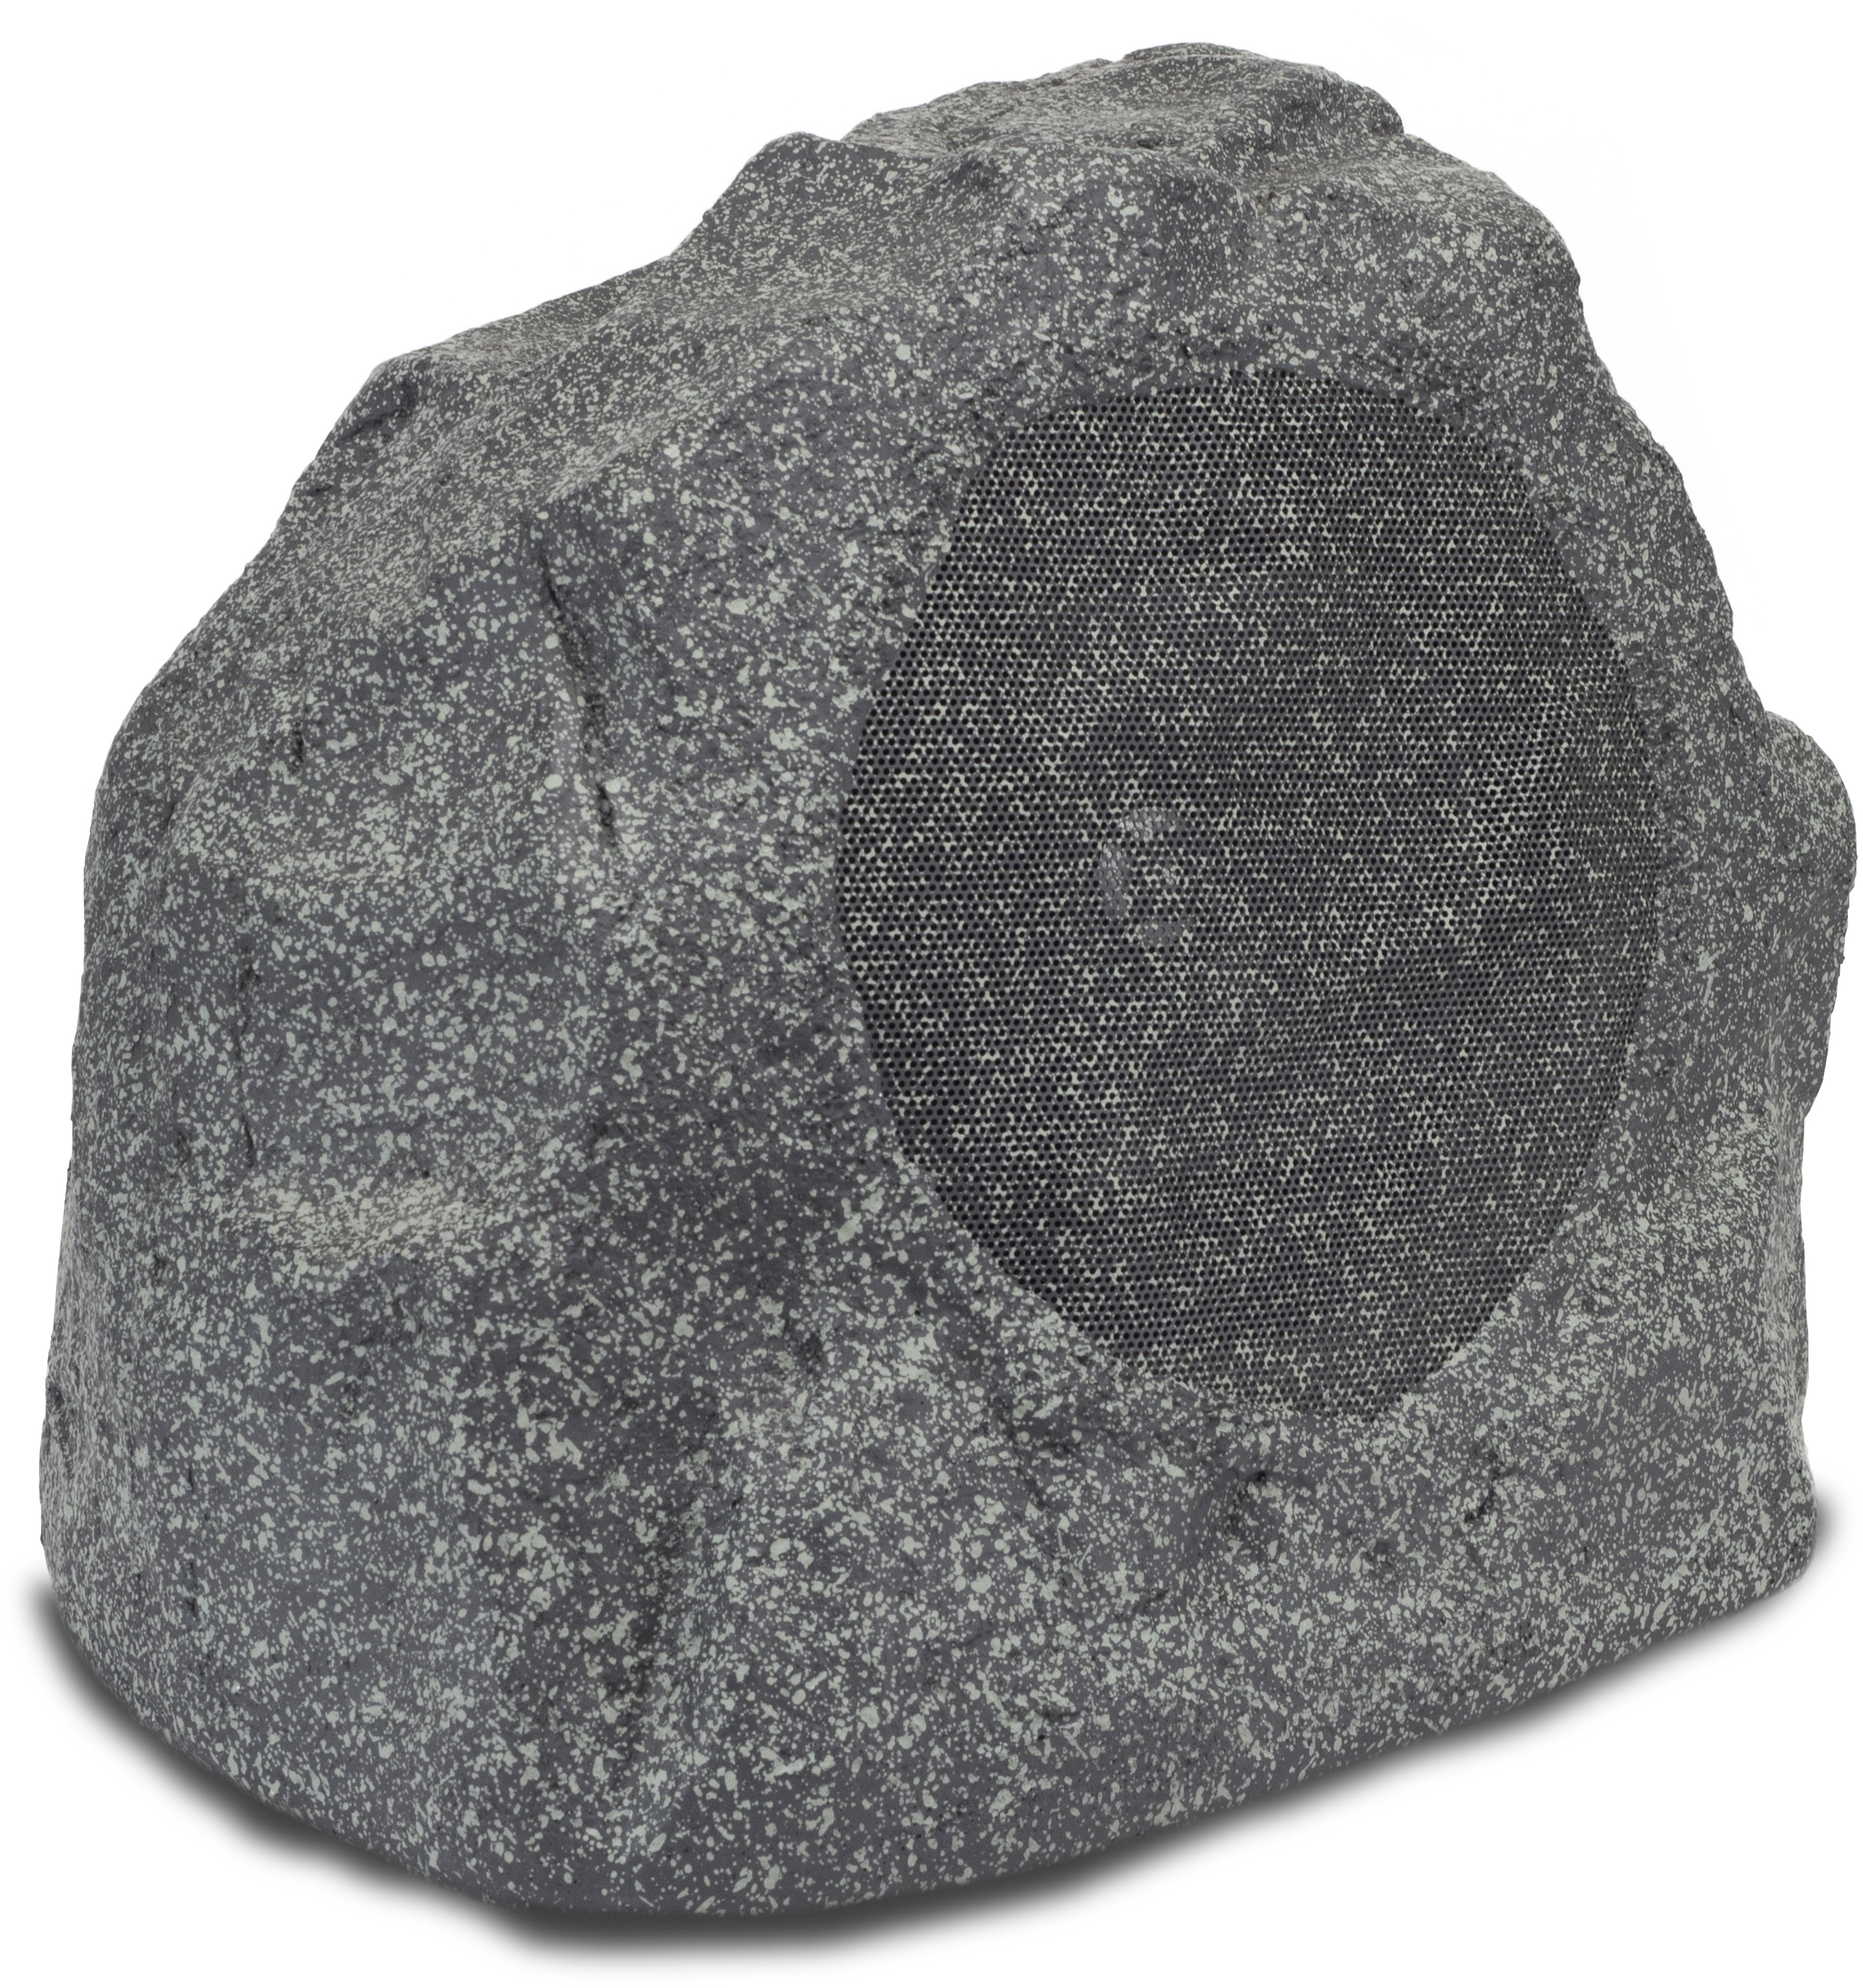 Klipsch® Professional Series 6.5" Granite Rock Satellite Speaker